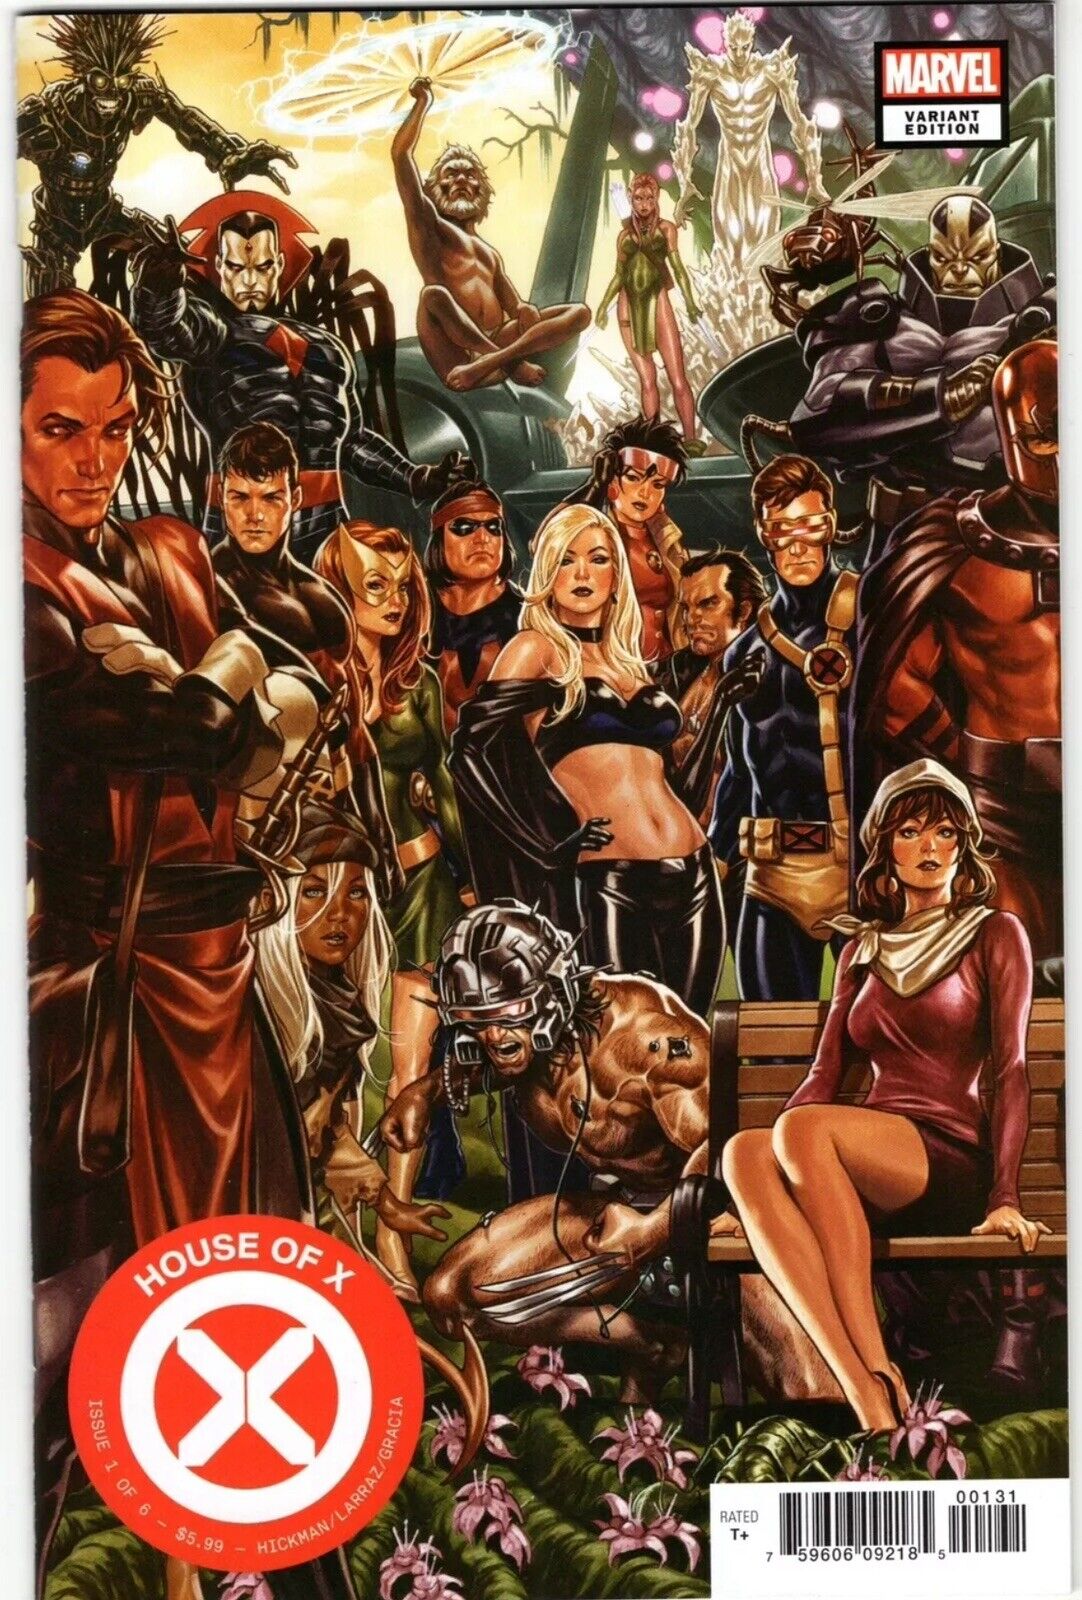 HOUSE OF X # 1 2019 Marvel Comics 1st Print MARK BROOKS CONNECTING VARIANT NM